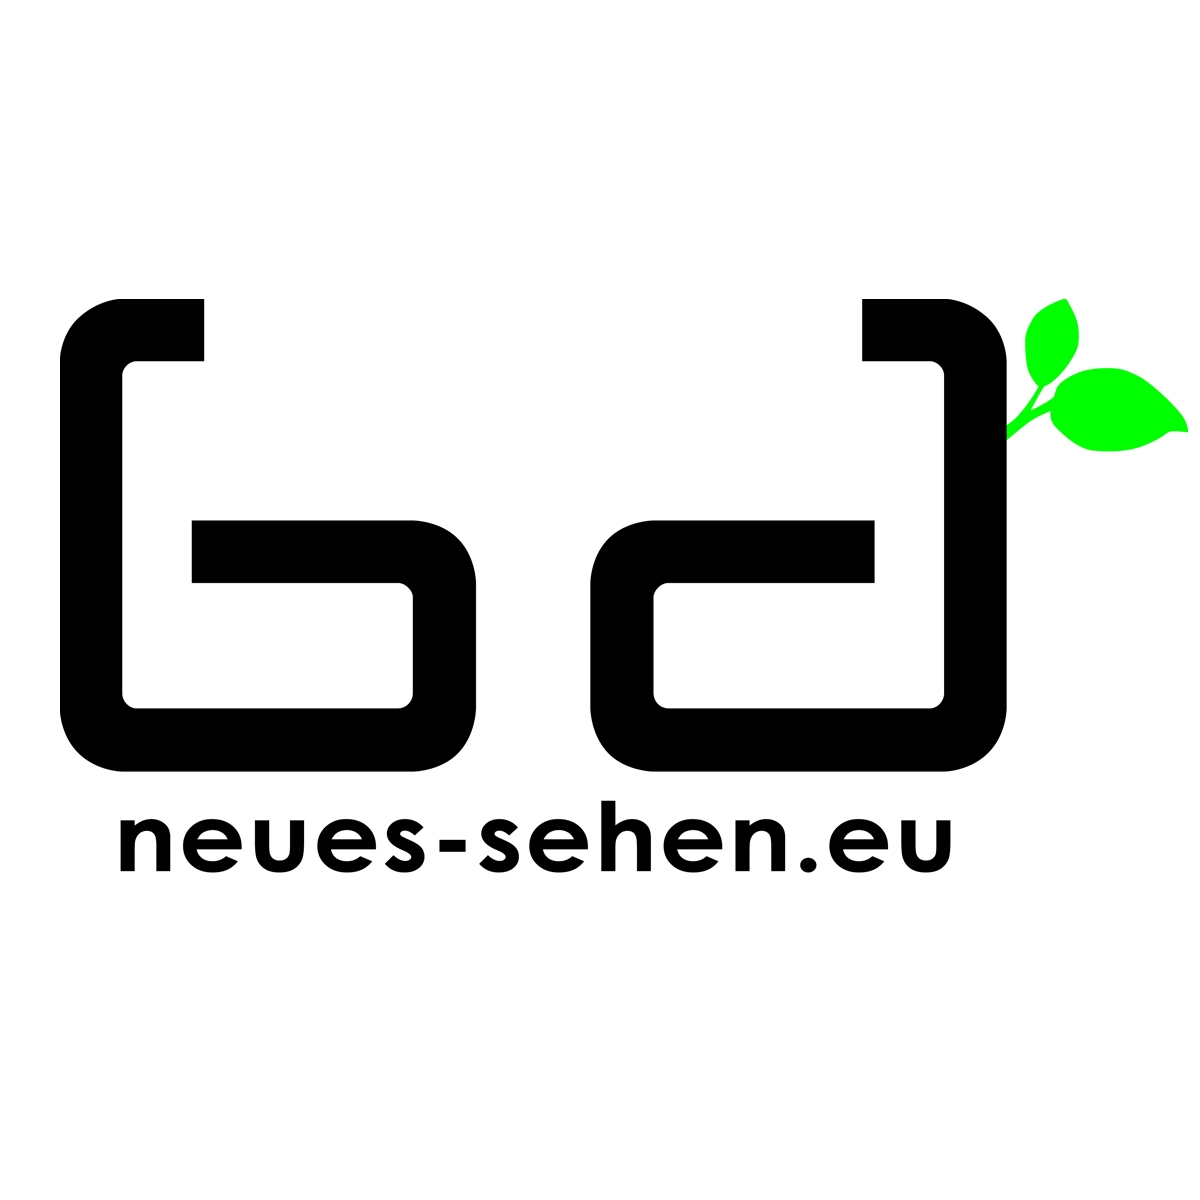 Logo neues-sehen.eu